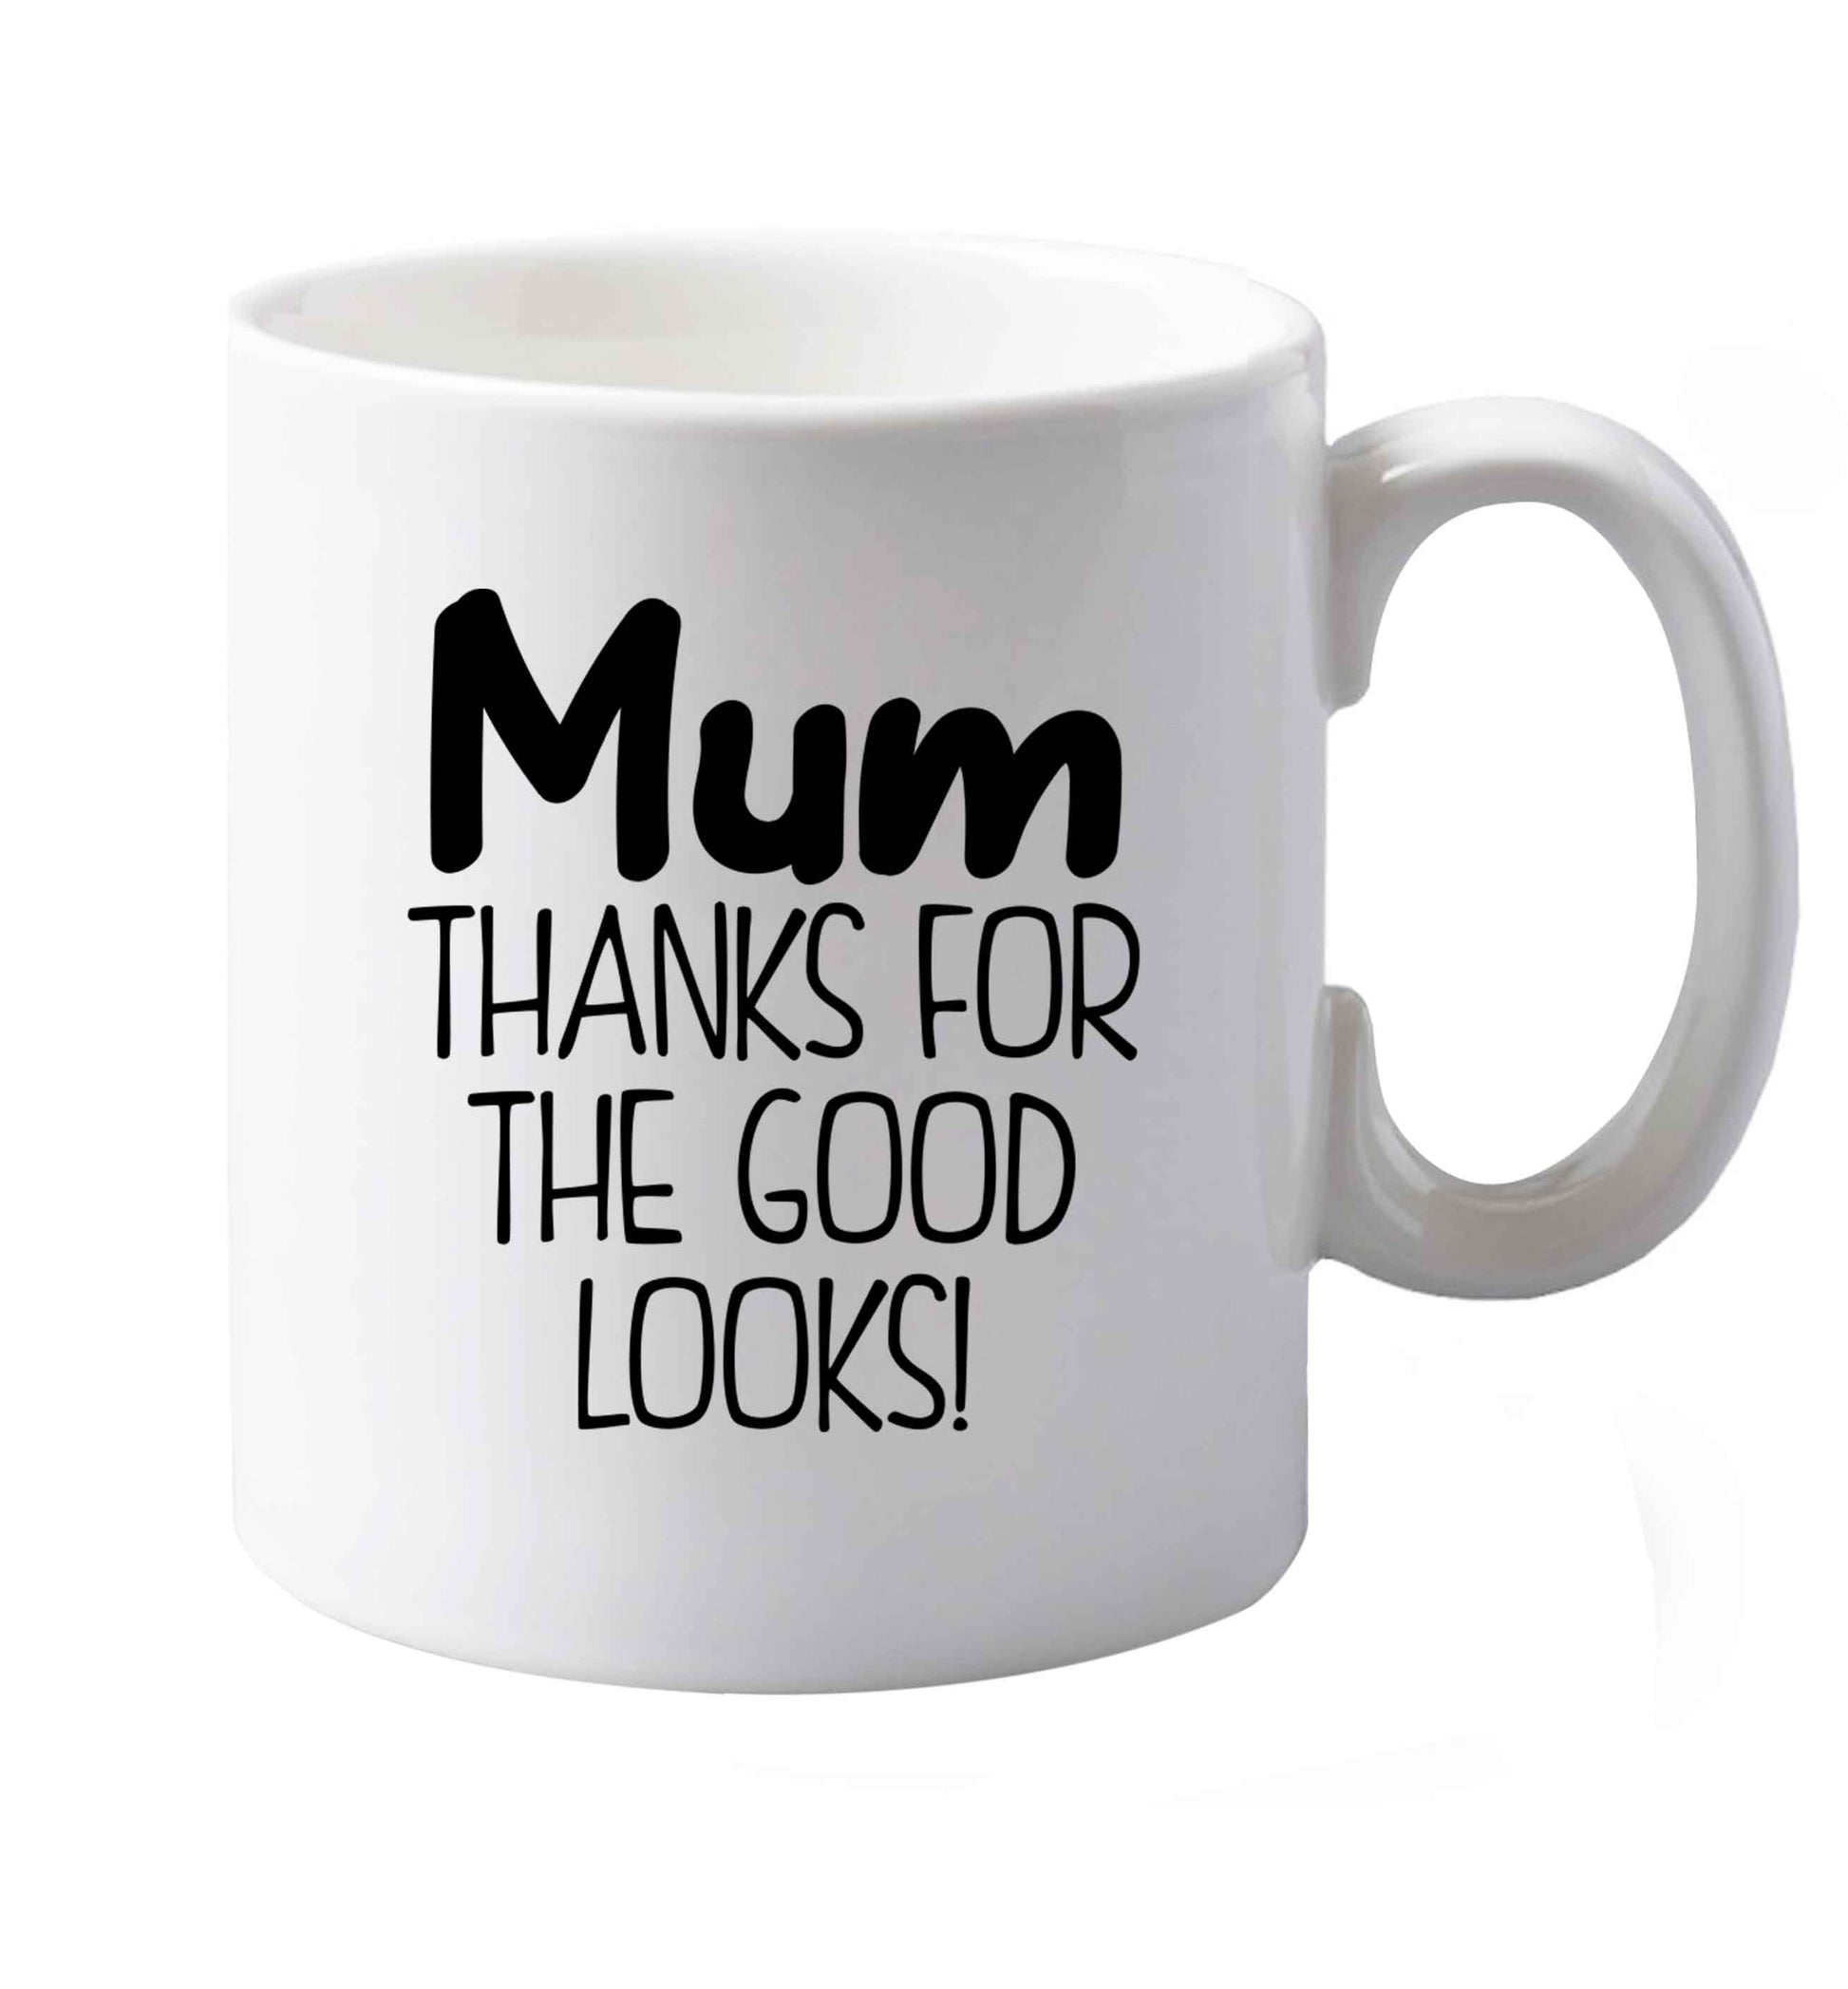 10 oz Mum thanks for the good looks! ceramic mug both sides